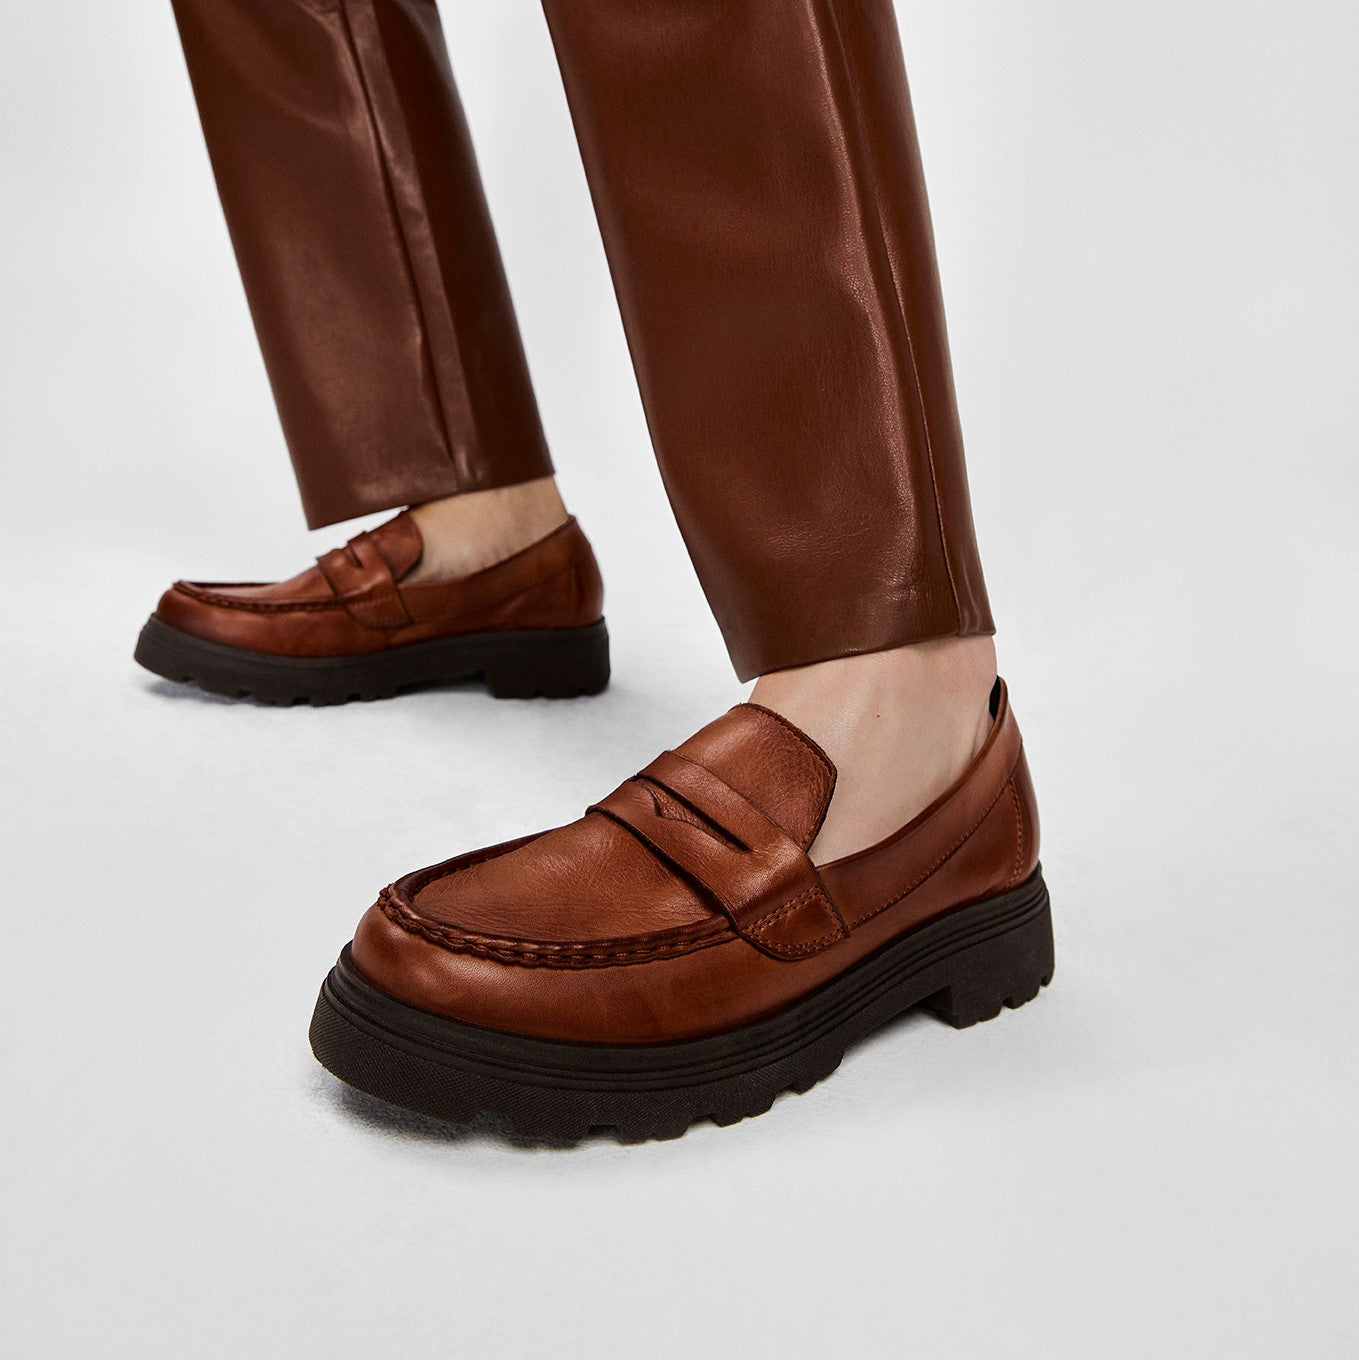 Aldo Women's Loafer Biglect (Brown) – ALDO Shoes UK